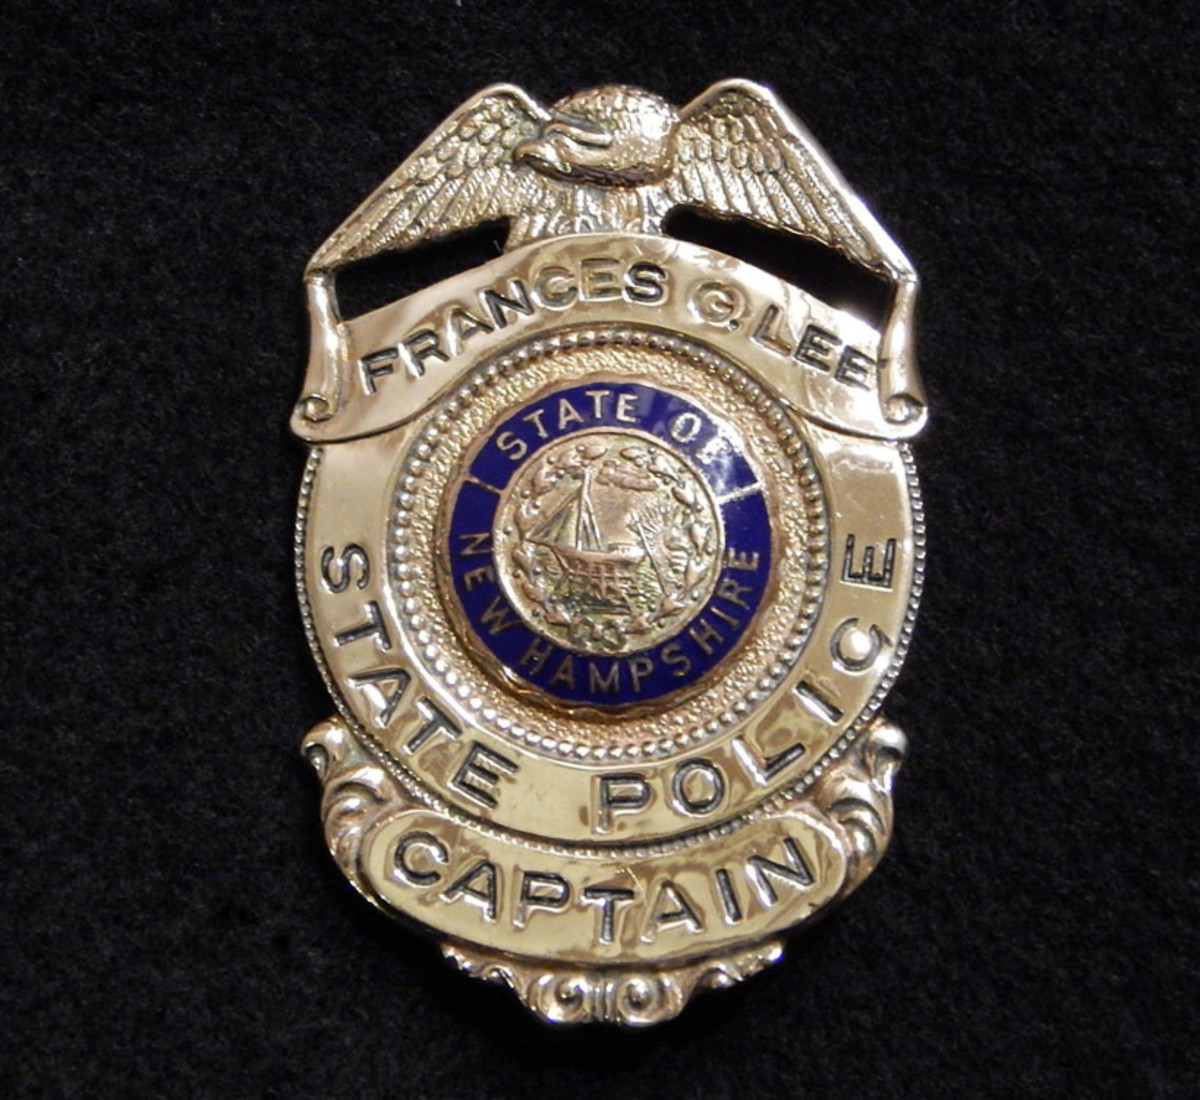 Lee's Police Captain Badge